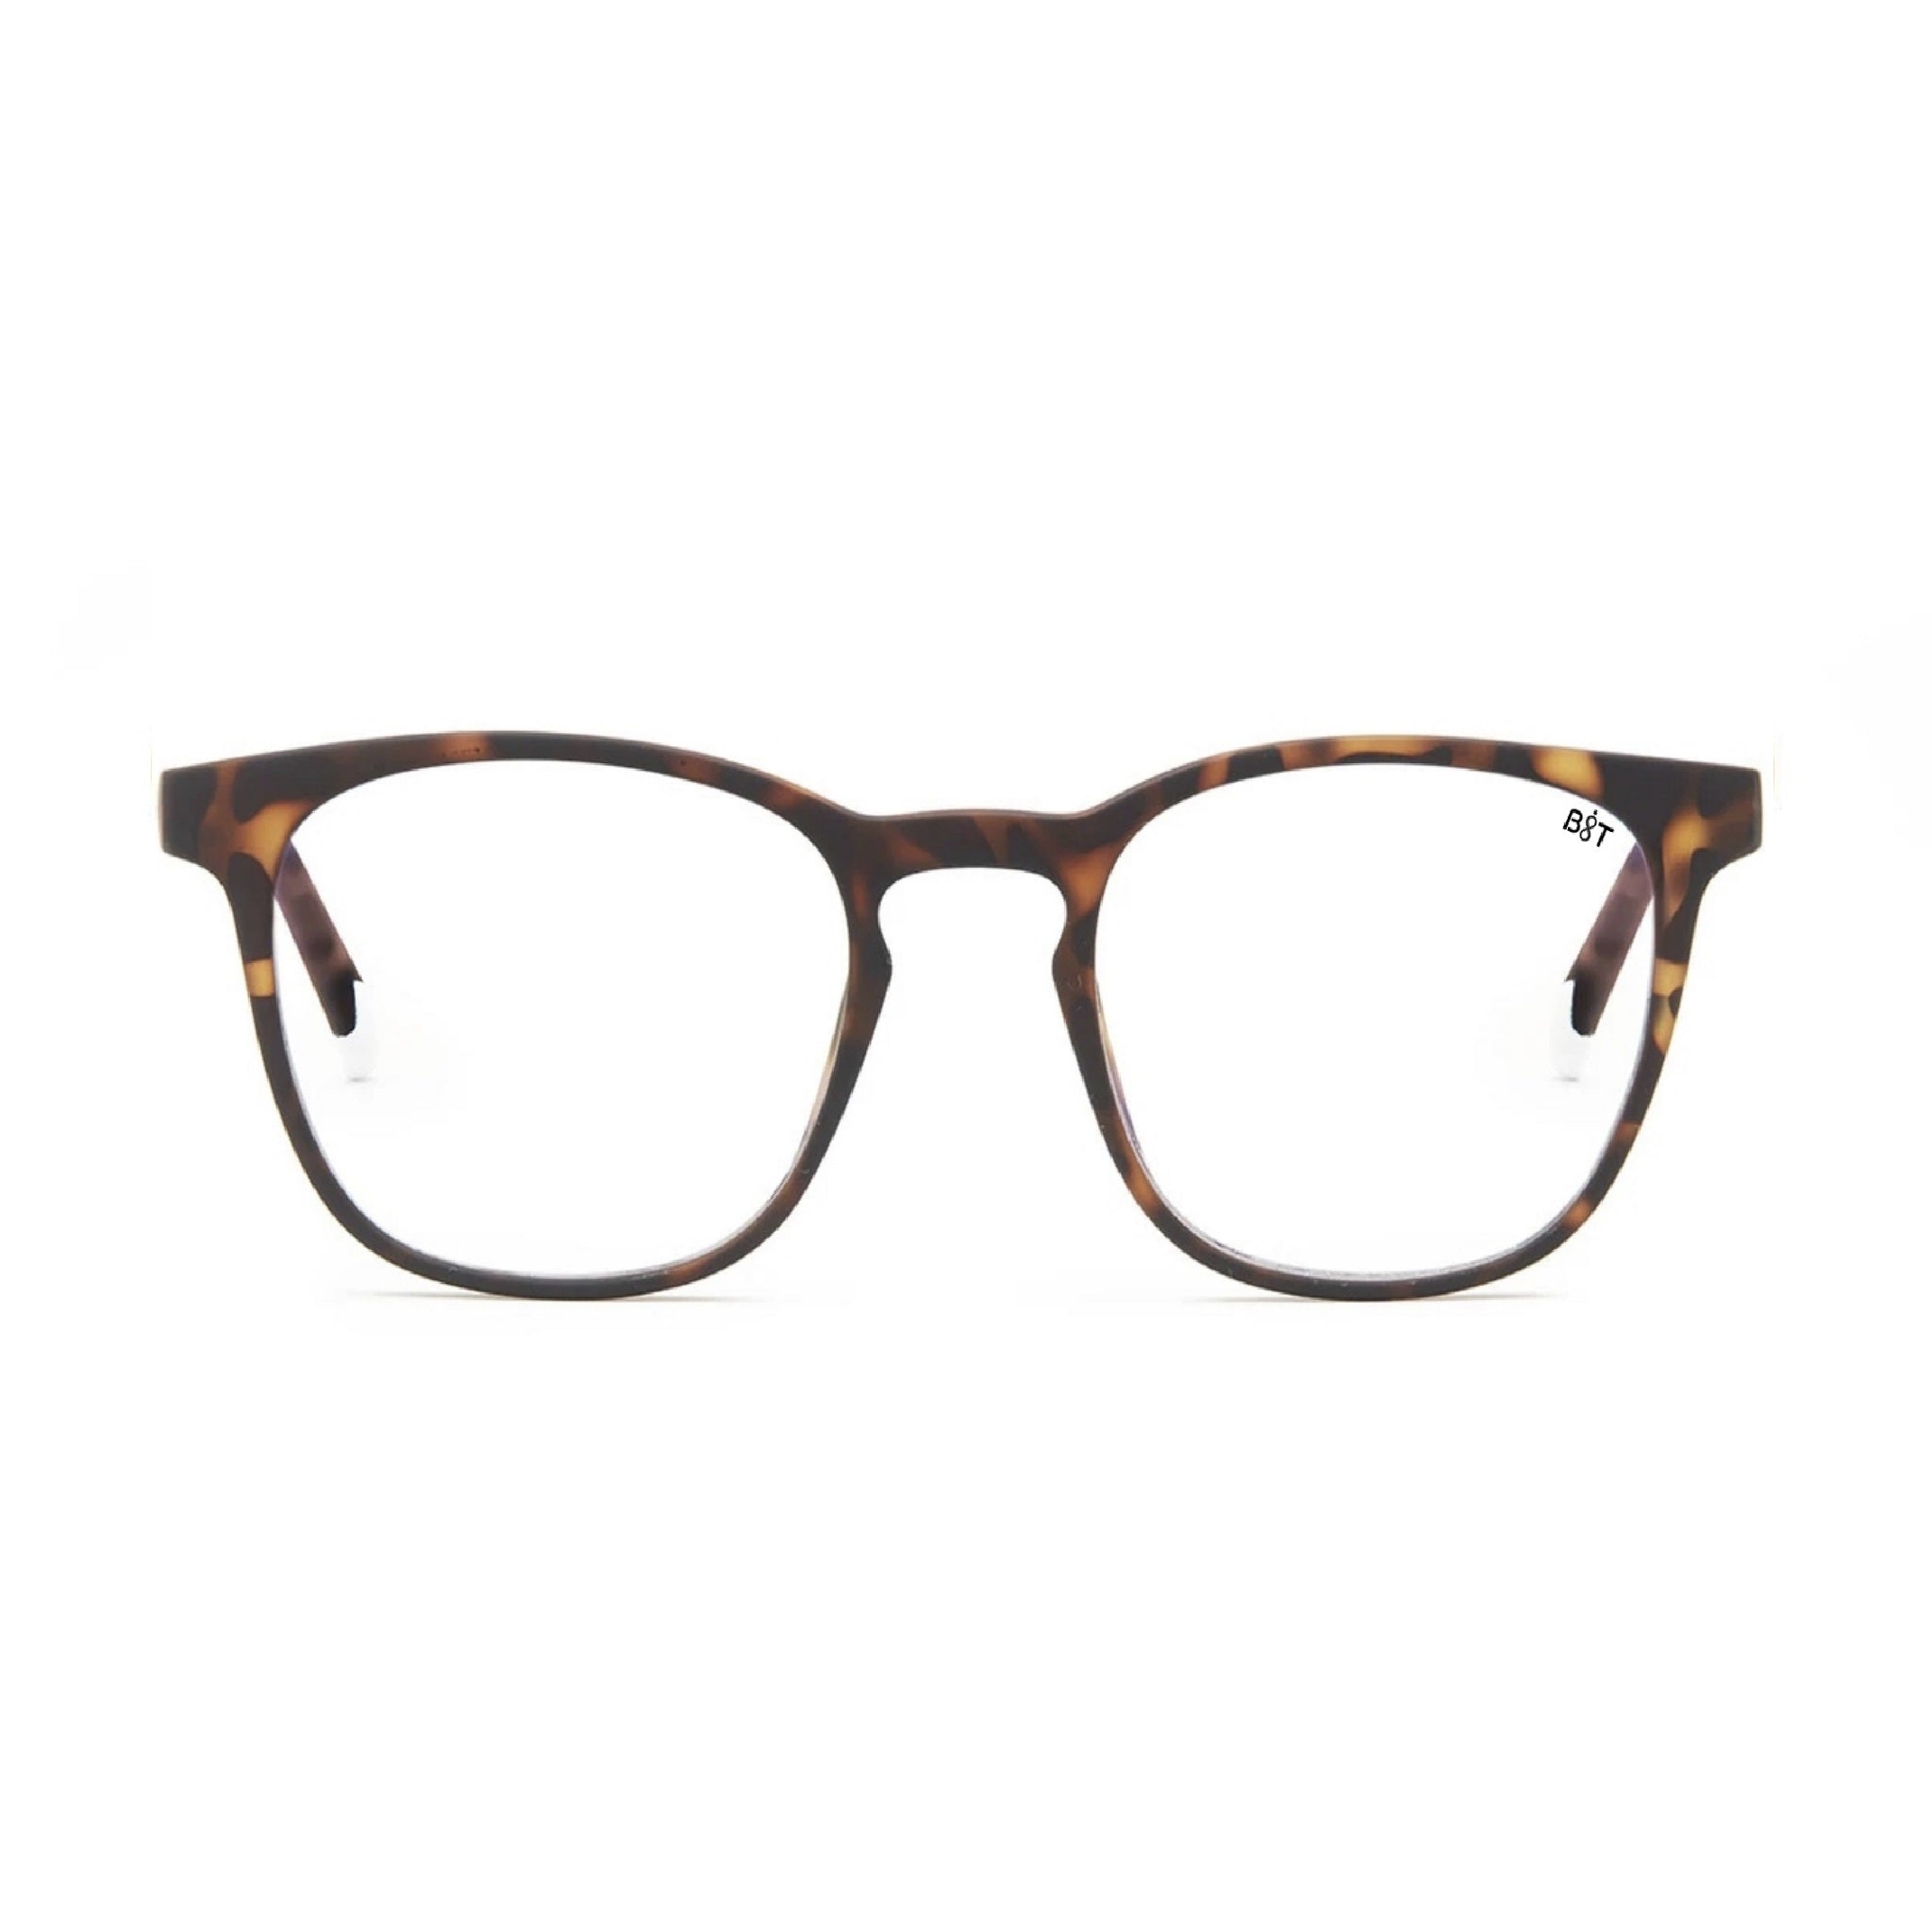 AmberArmor Eyewear - Computer Glasses